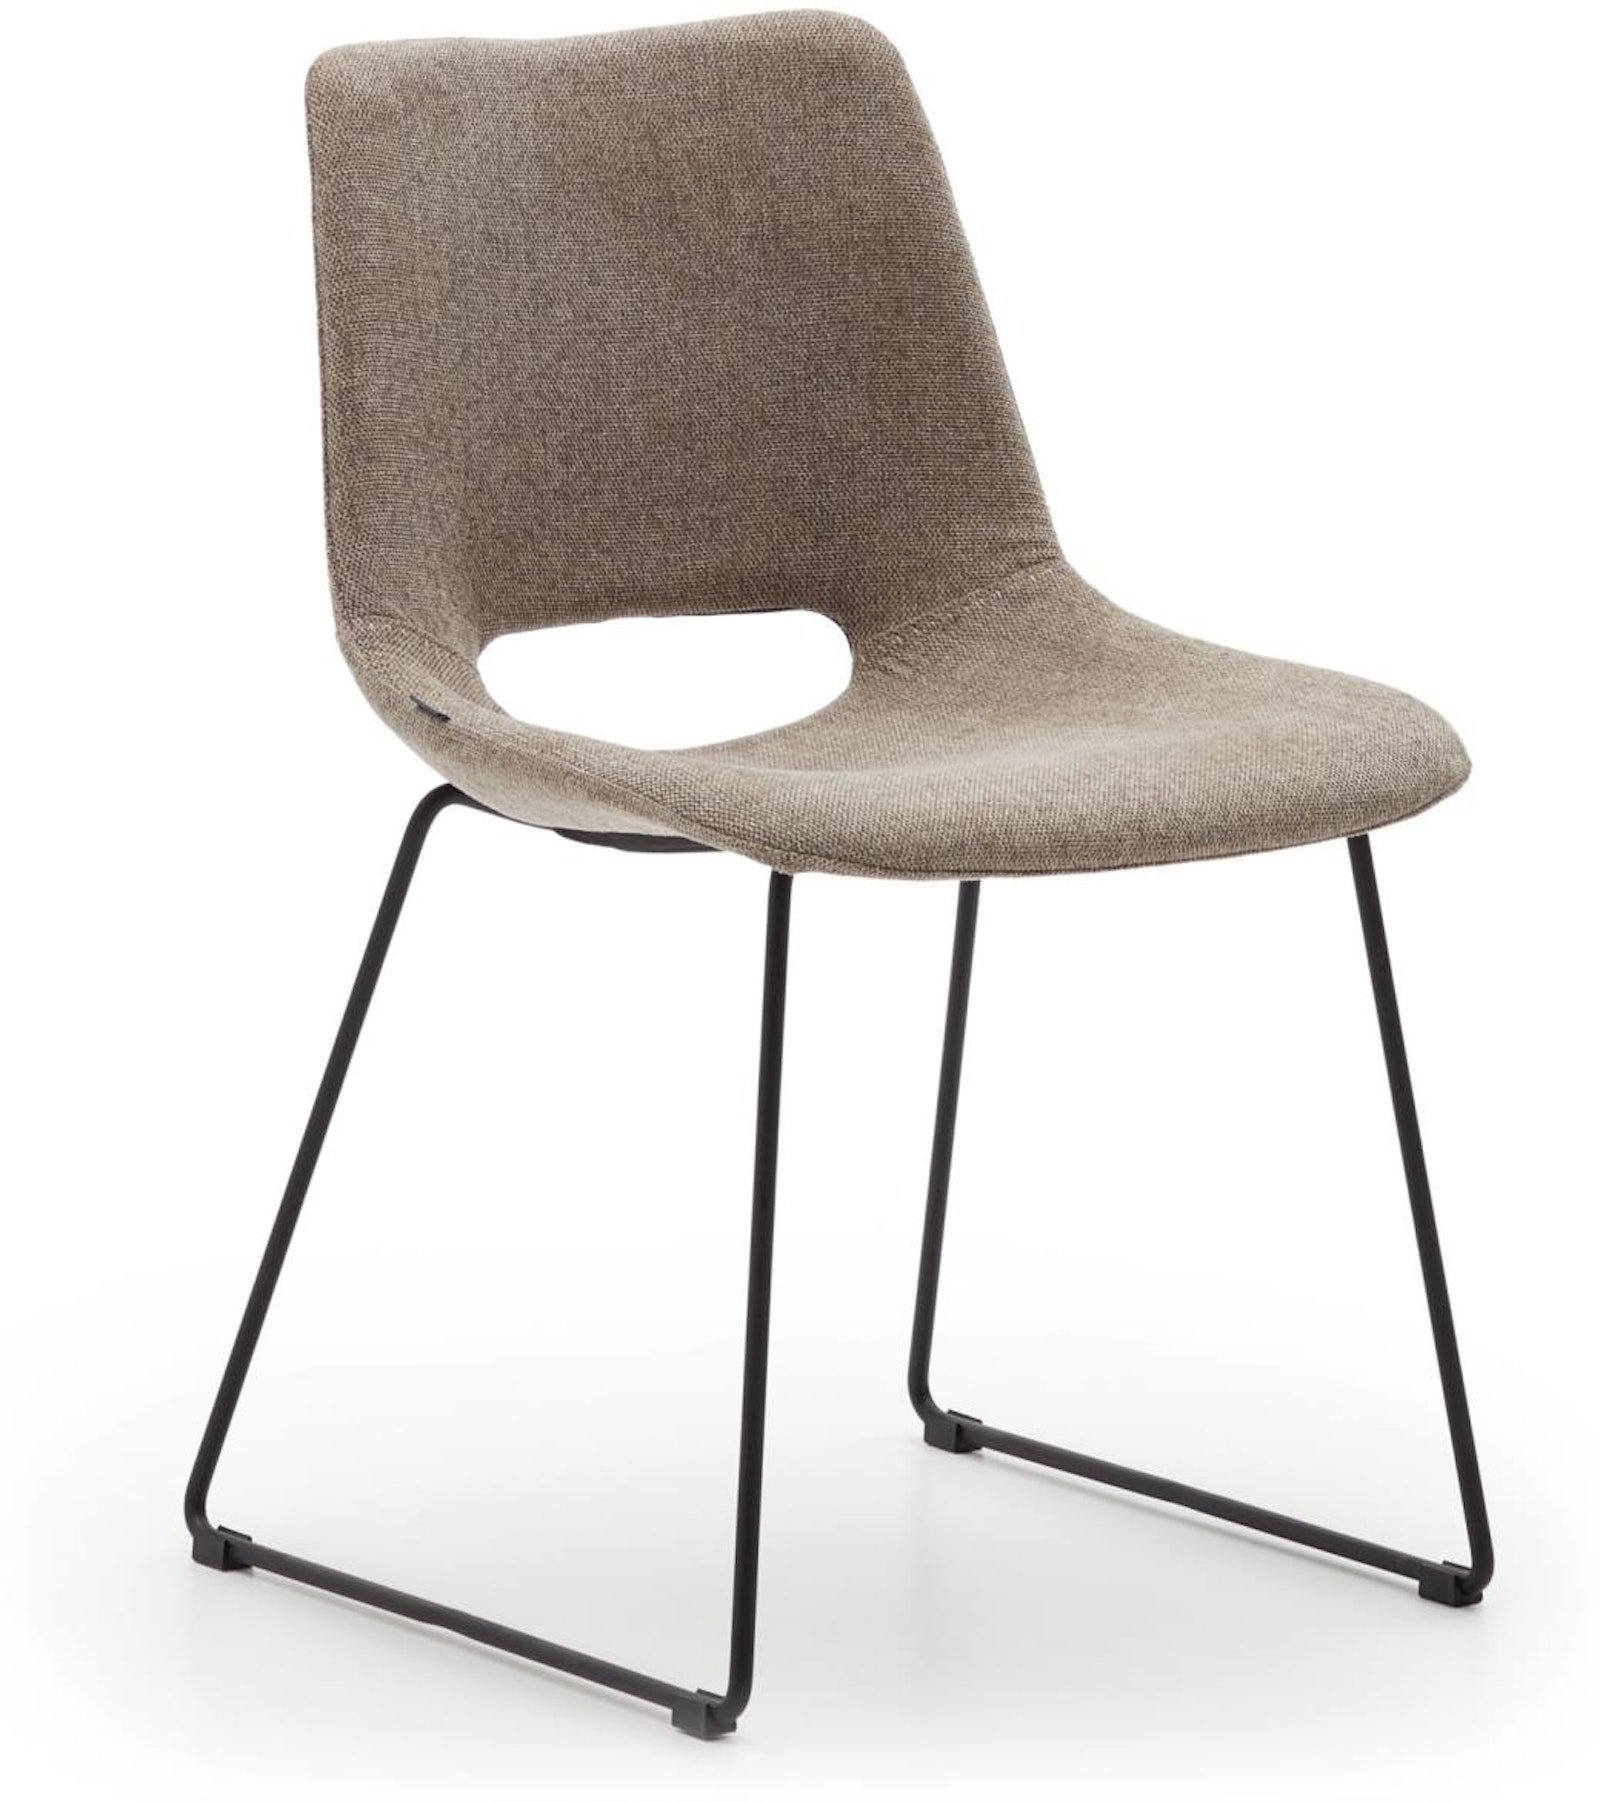 Zahara, Spisebordsstole, moderne, nordisk, rustik, stof by Laforma (H: 78 cm. x B: 49 cm. x L: 55 cm., Brun)